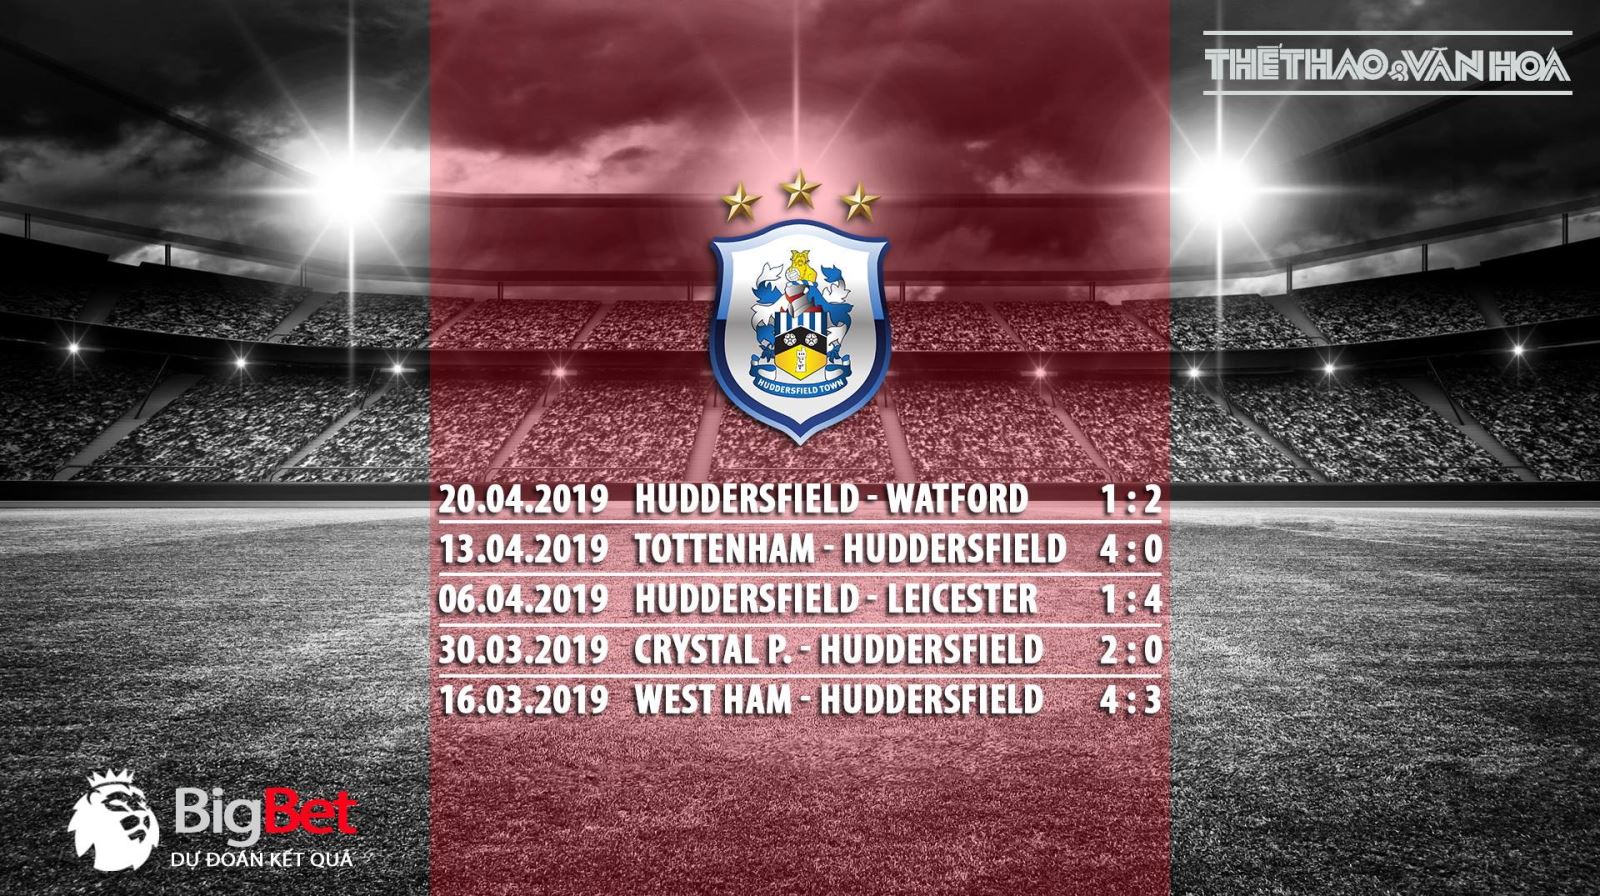 Liverpool vs Huddersfield, trực tiếp bóng đá, Liverpool, Huddersfield, link xem trực tiếp Liverpool vs Huddersfield, nhận định bóng đá Liverpool vs Huddersfield